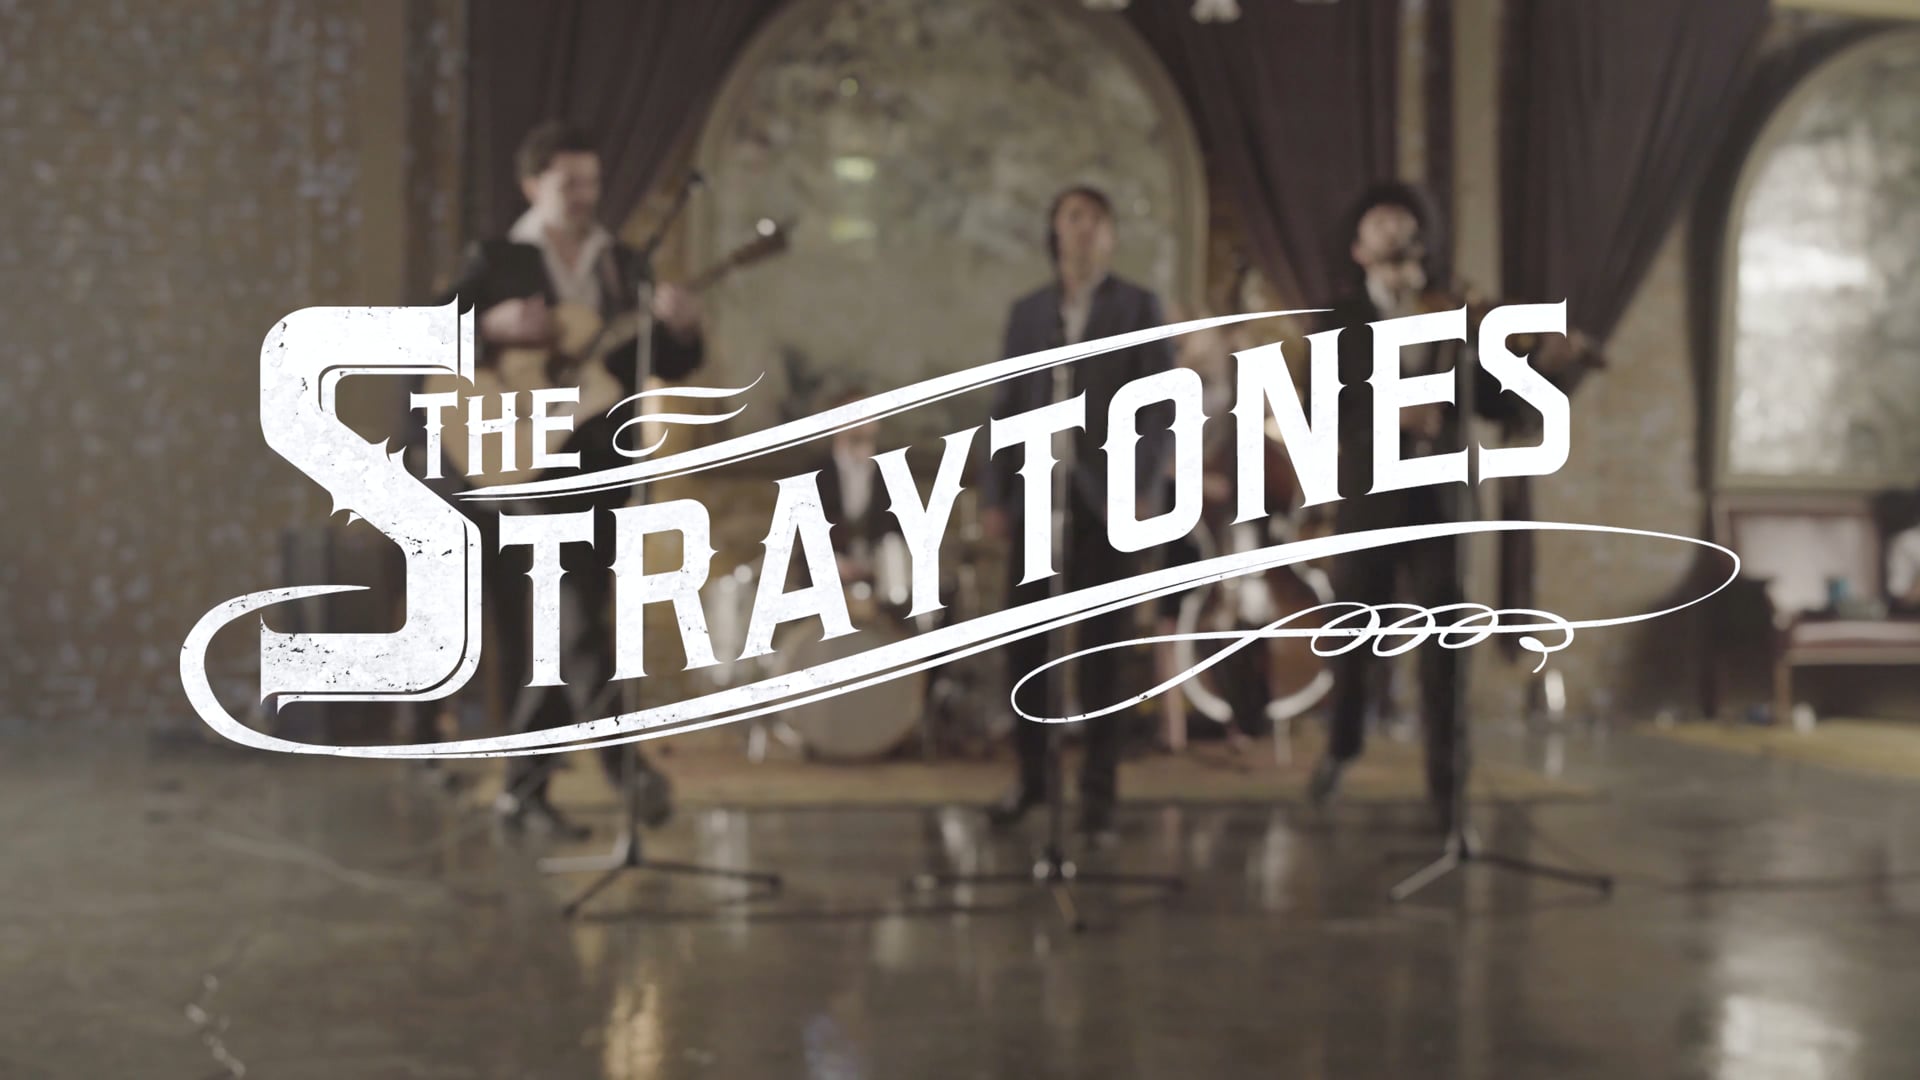 Promotional video thumbnail 1 for The Straytones